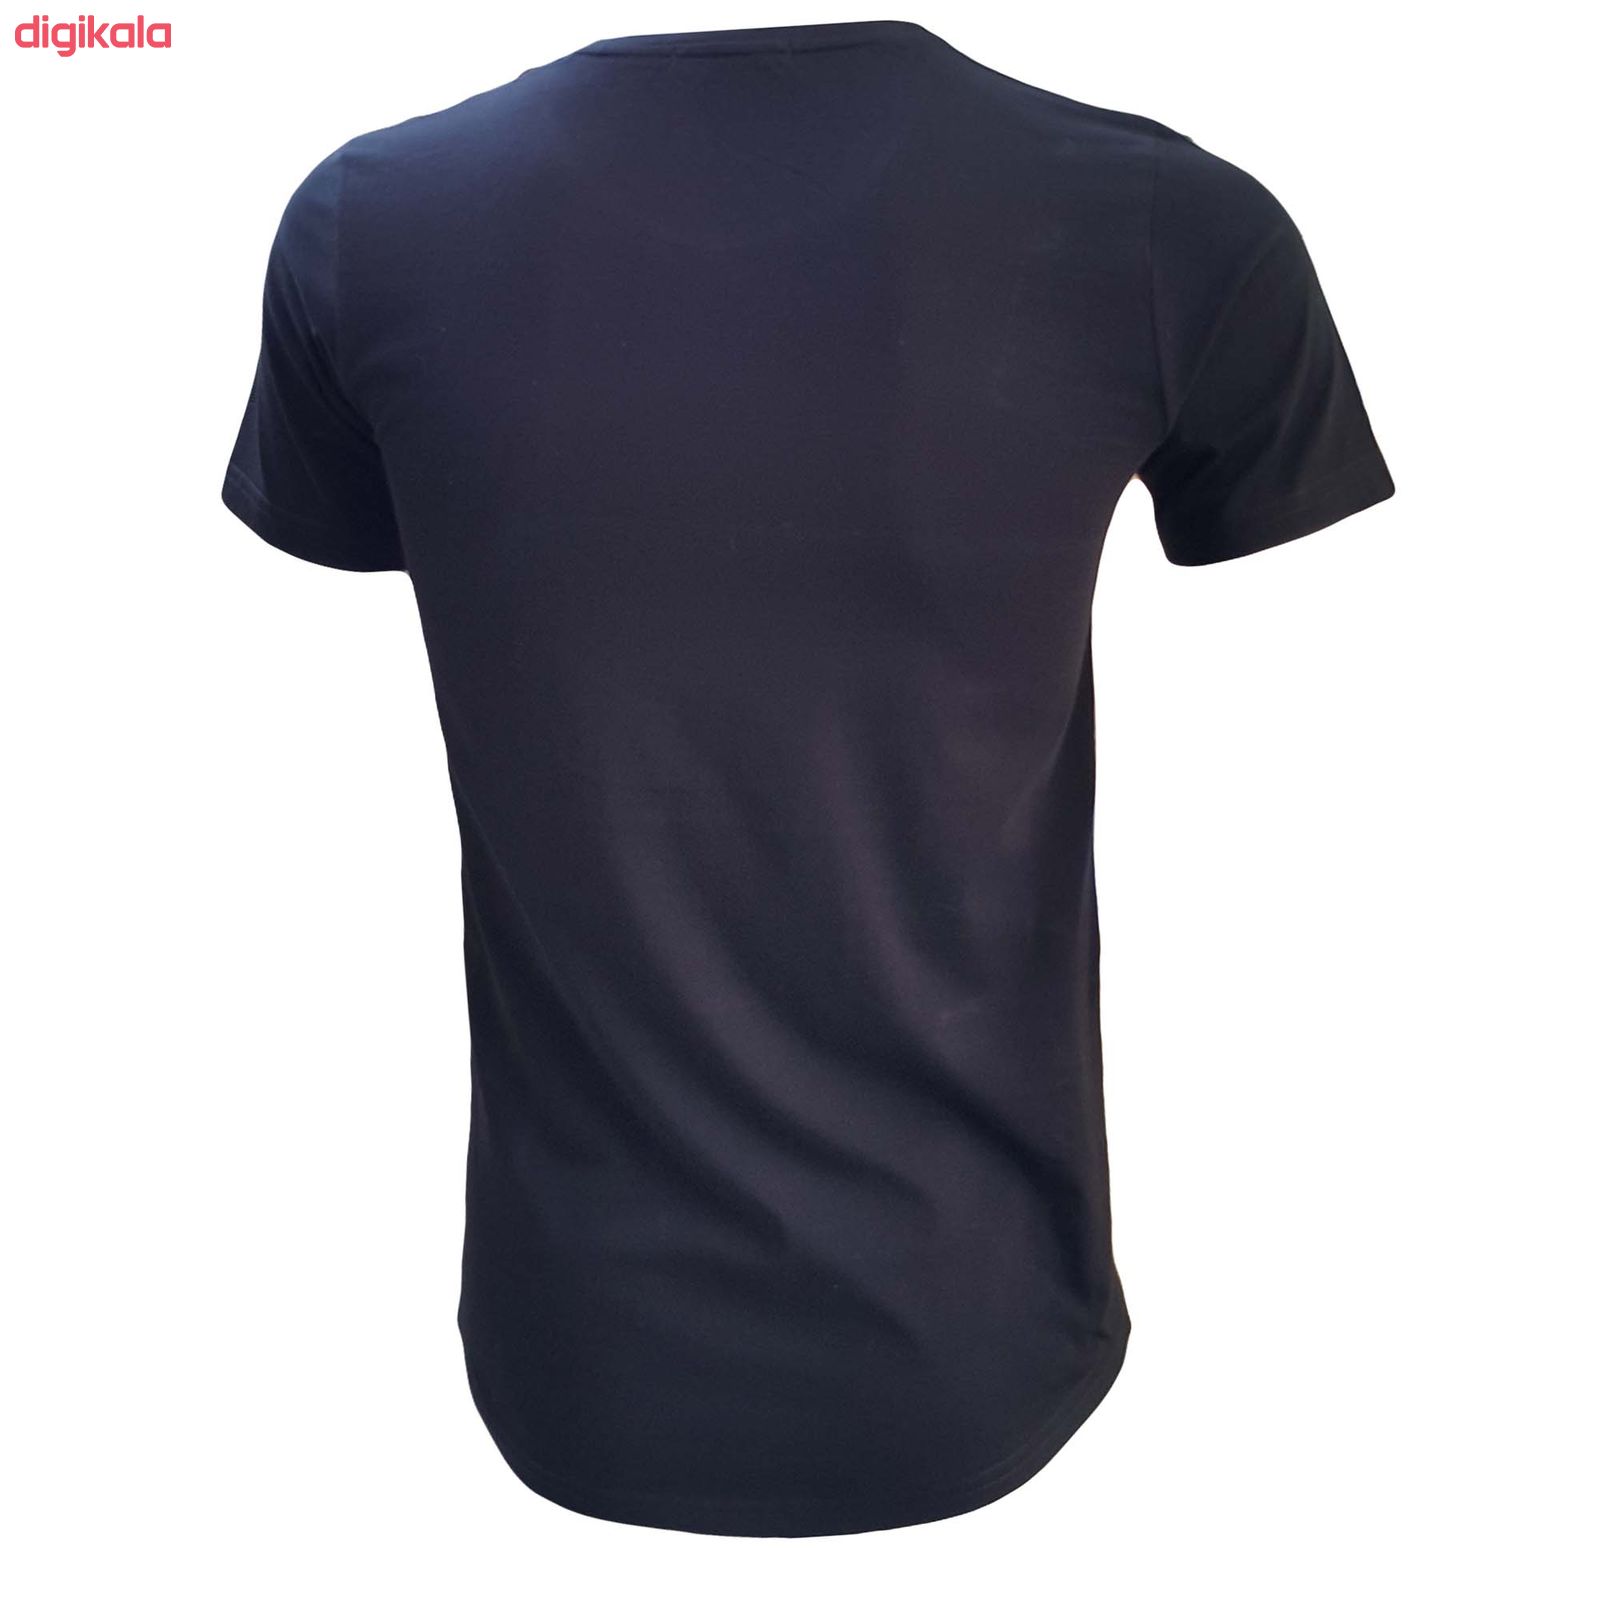  تی شرت آستین کوتاه مردانه طرح آژاکس کد A260G رنگ مشکی